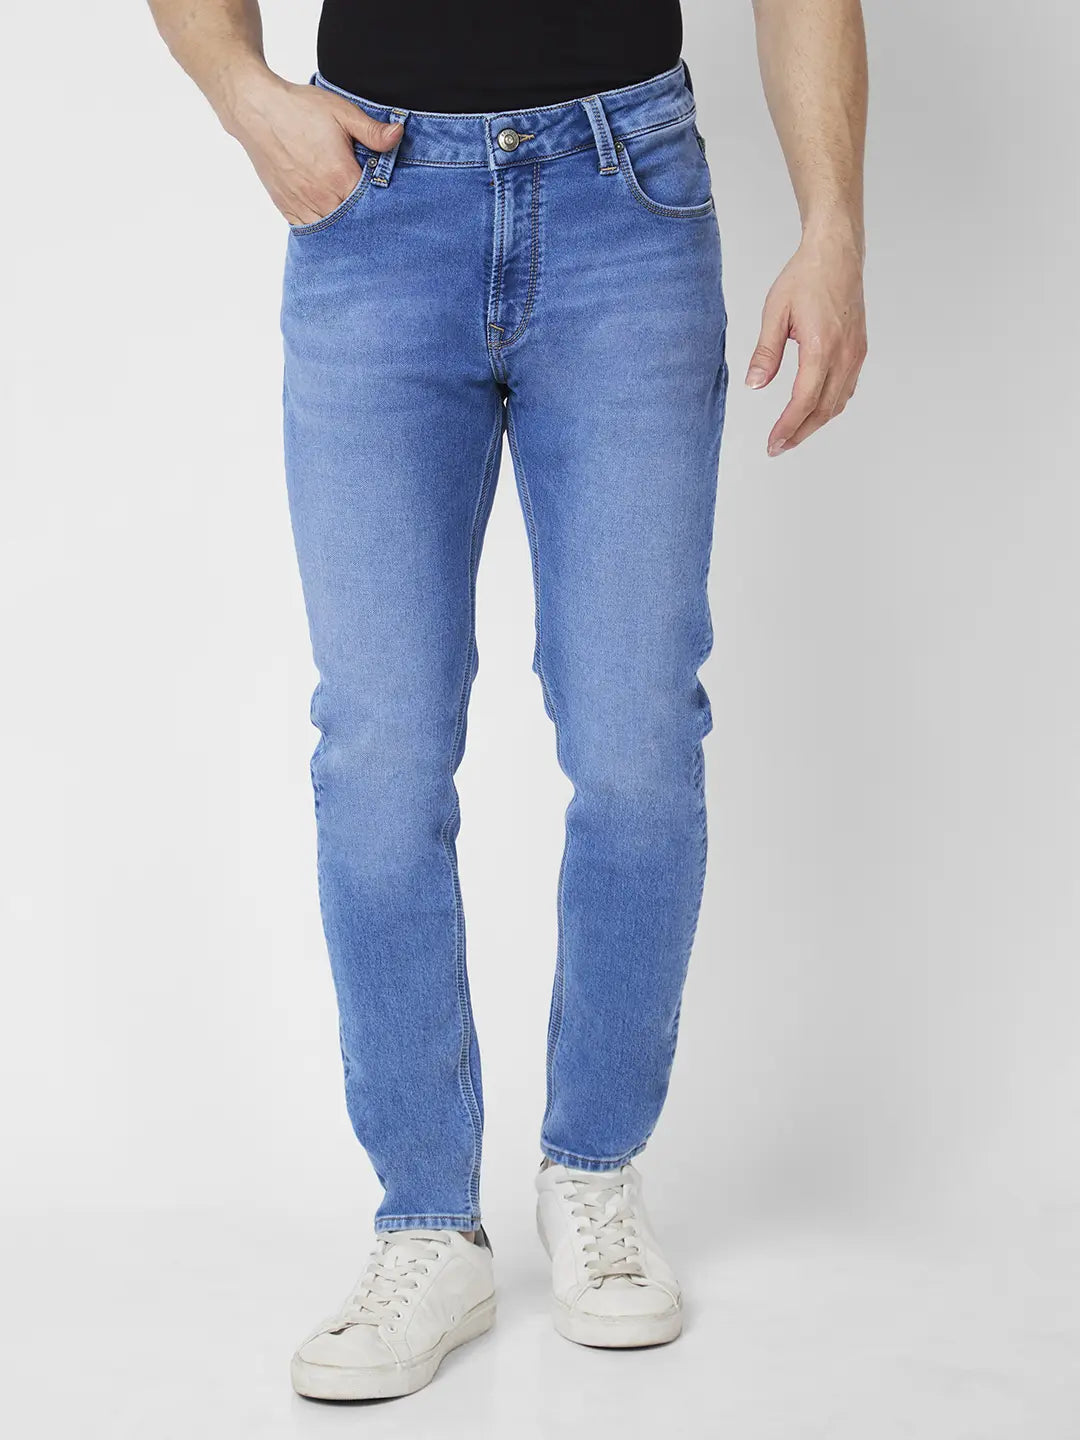 Buy Navy Blue Knee Cut Mens Jeans Online | Tistabene - Tistabene